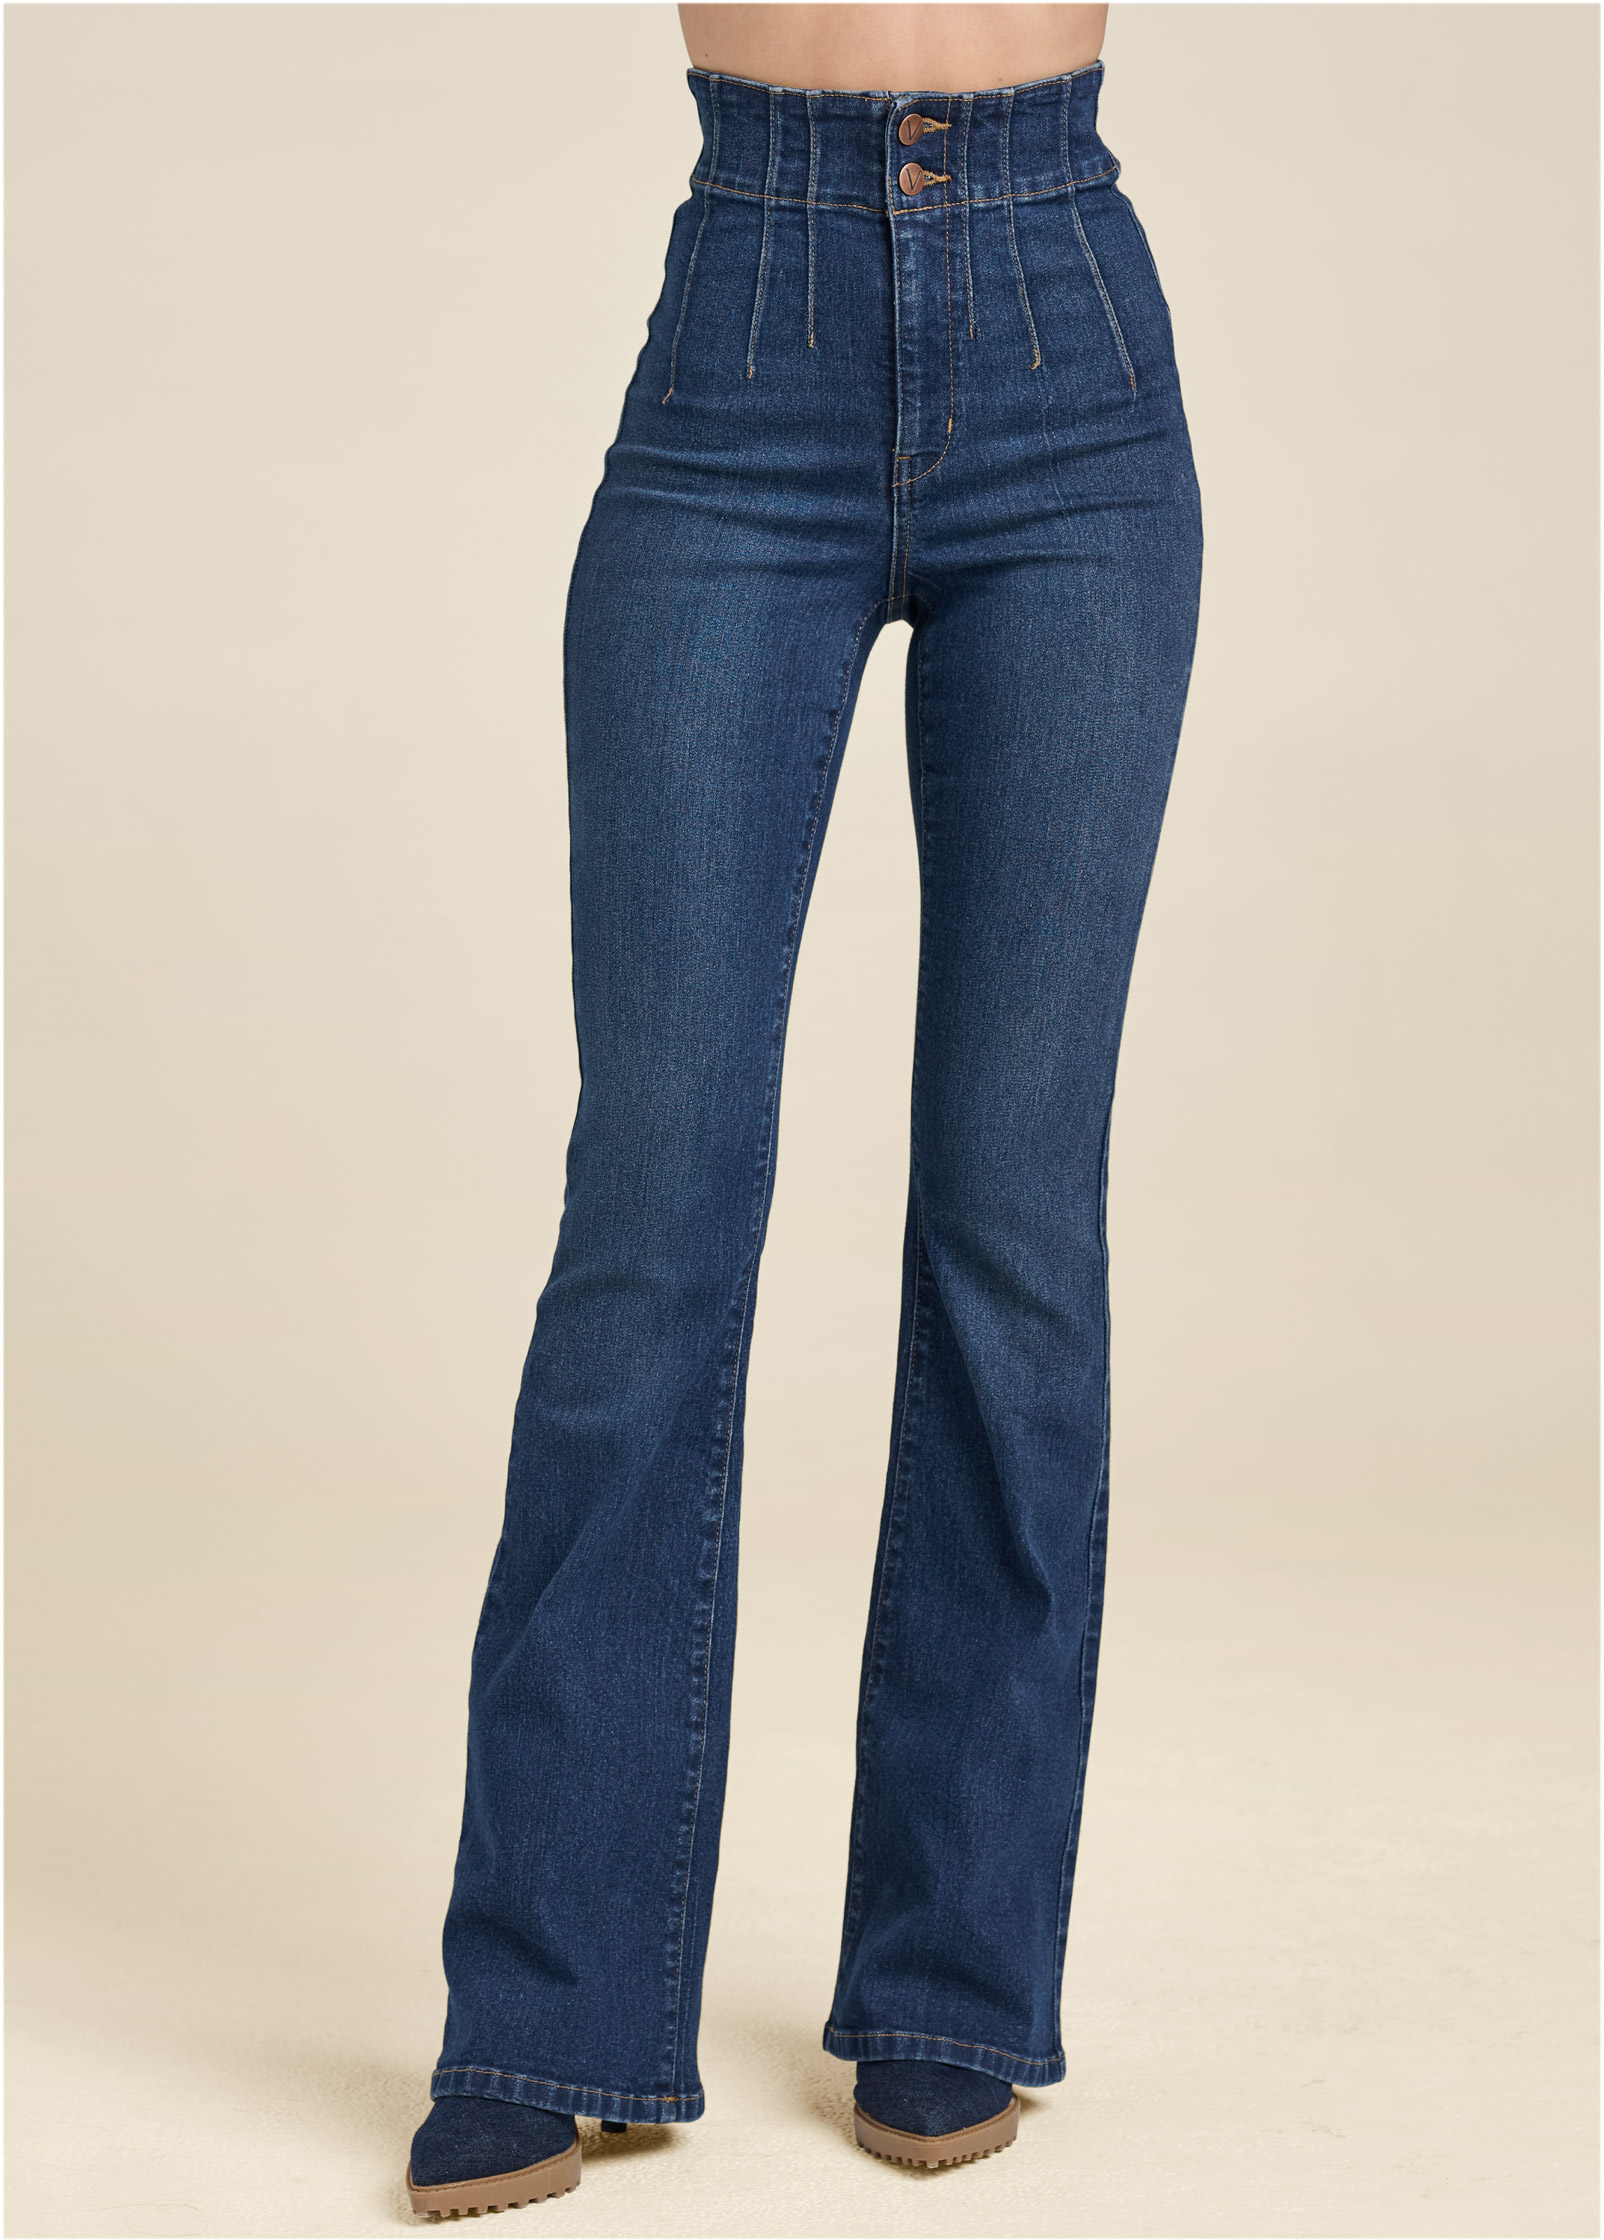 Pintuck Semi-Flare Jeans in Dark Wash - Denim | VENUS